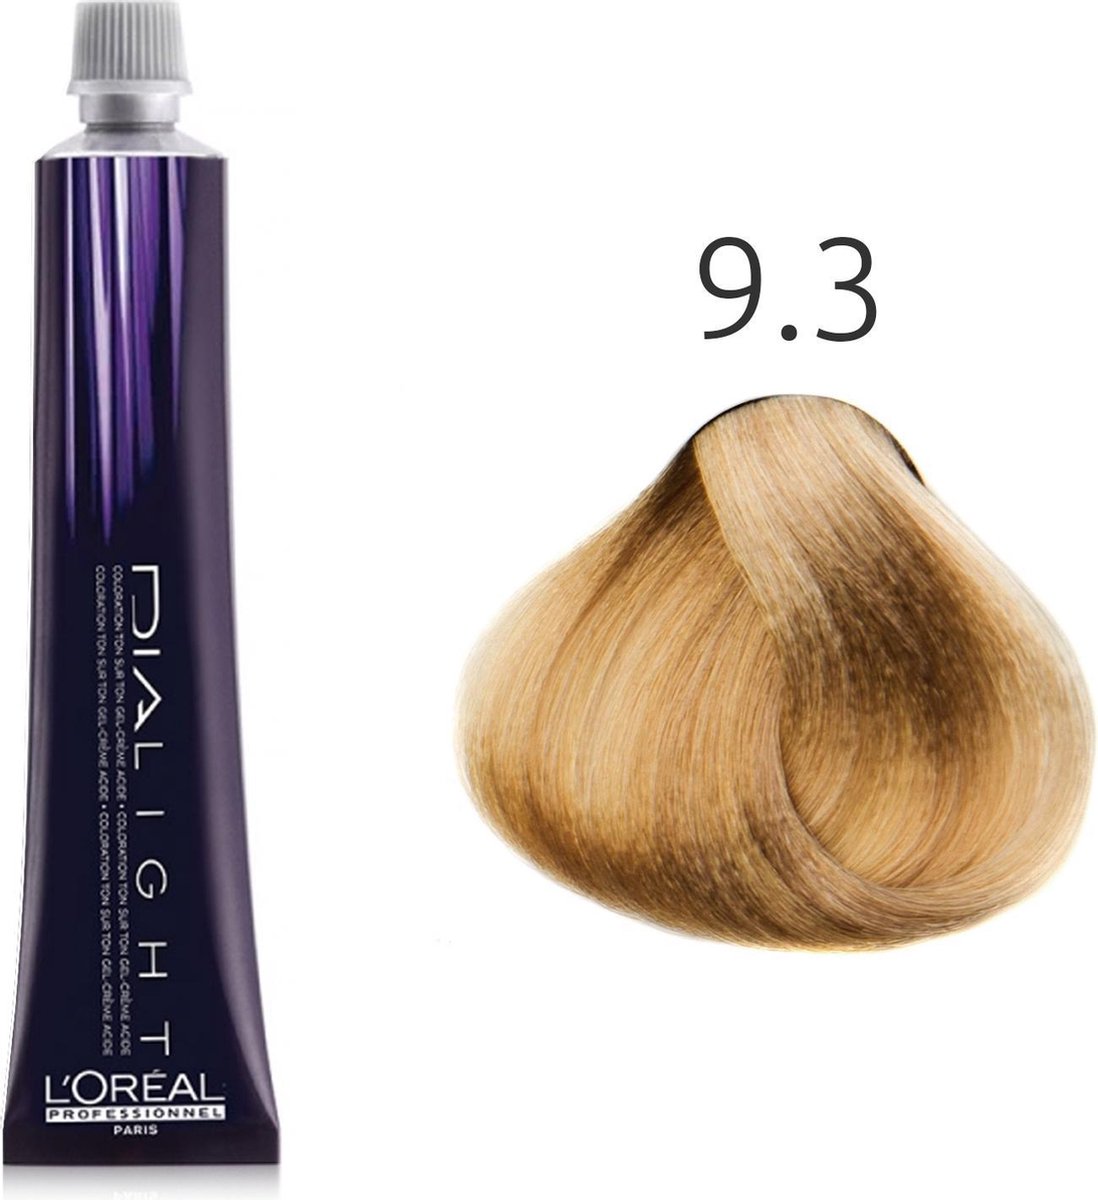 L'Oréal Paris (public) Dia Light 9.3 haarkleuring Blond 50 ml | bol.com